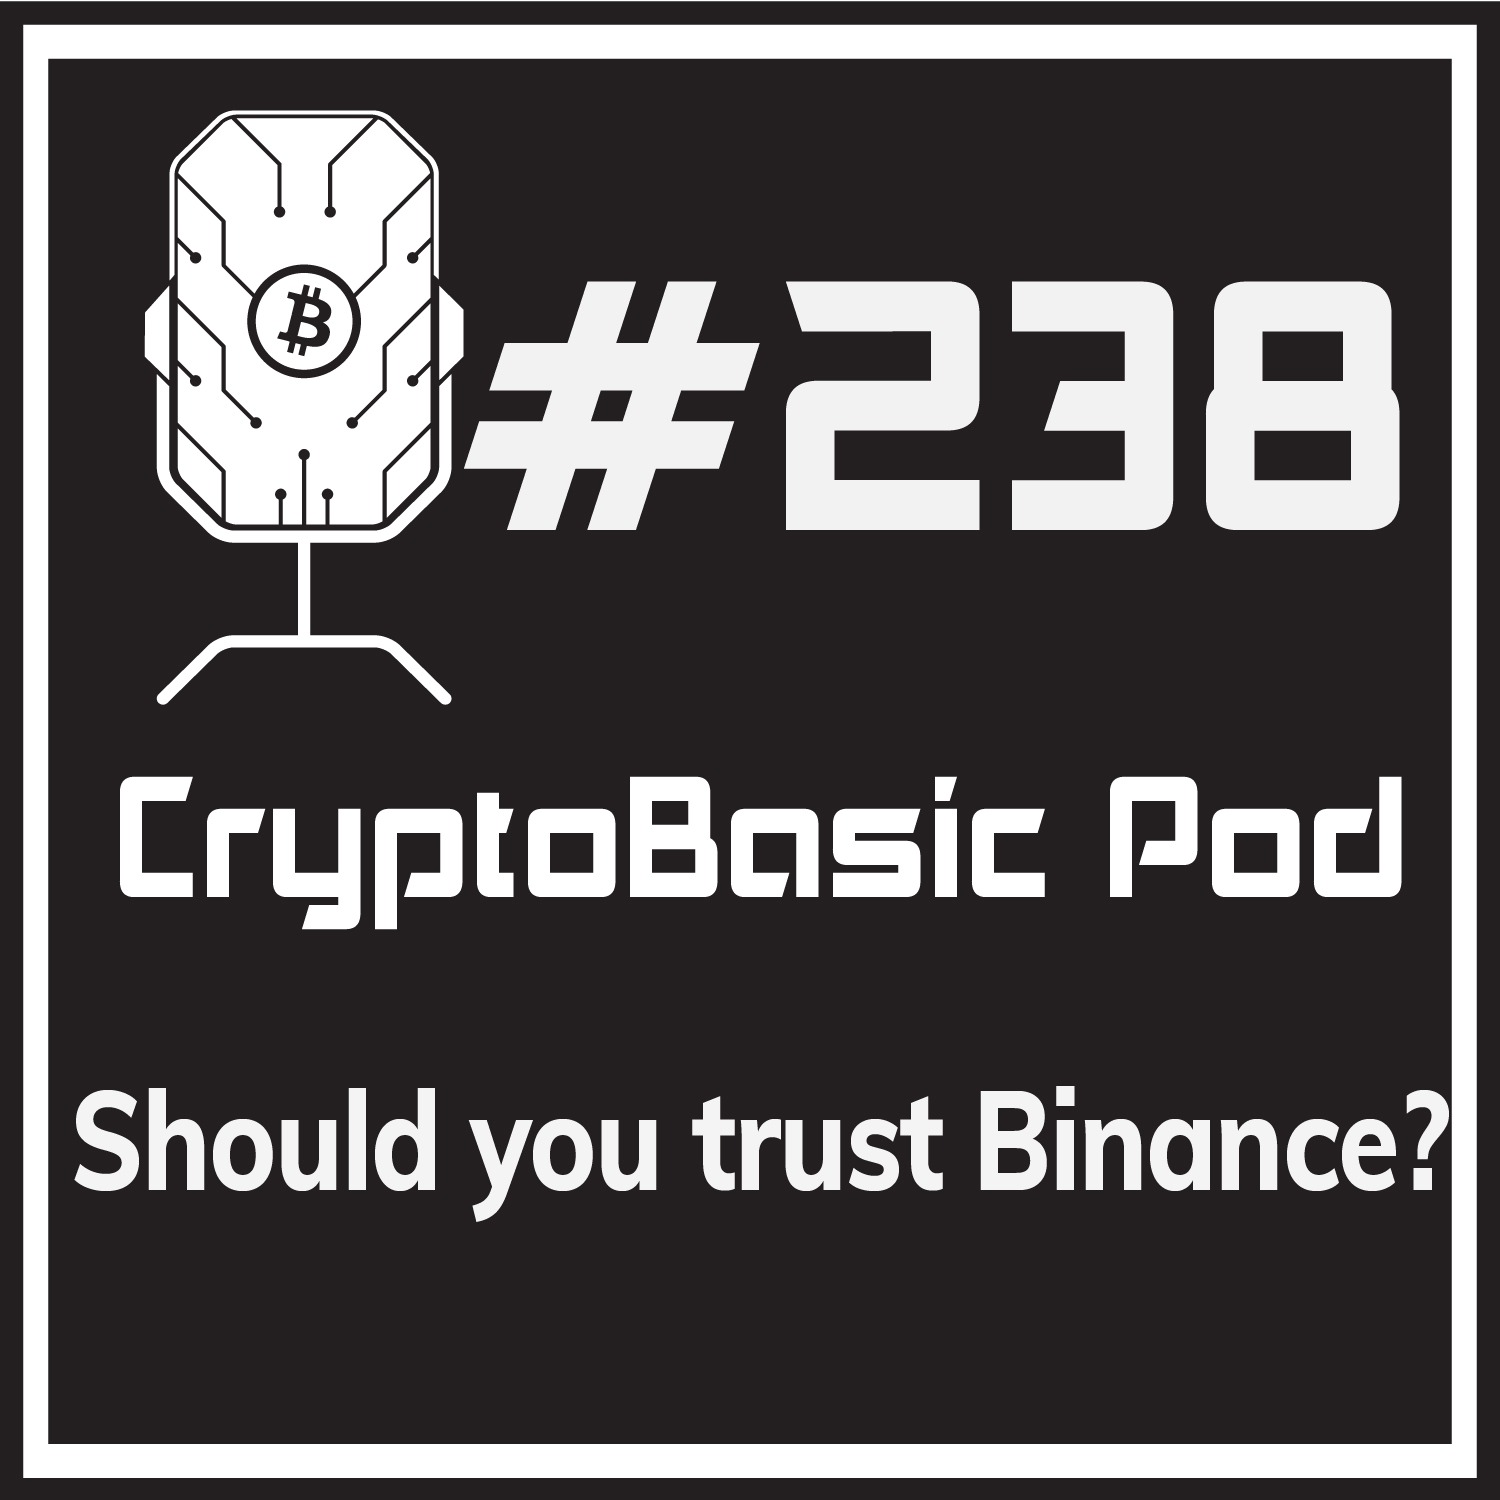 Episode 238 - Should you trust Binance?